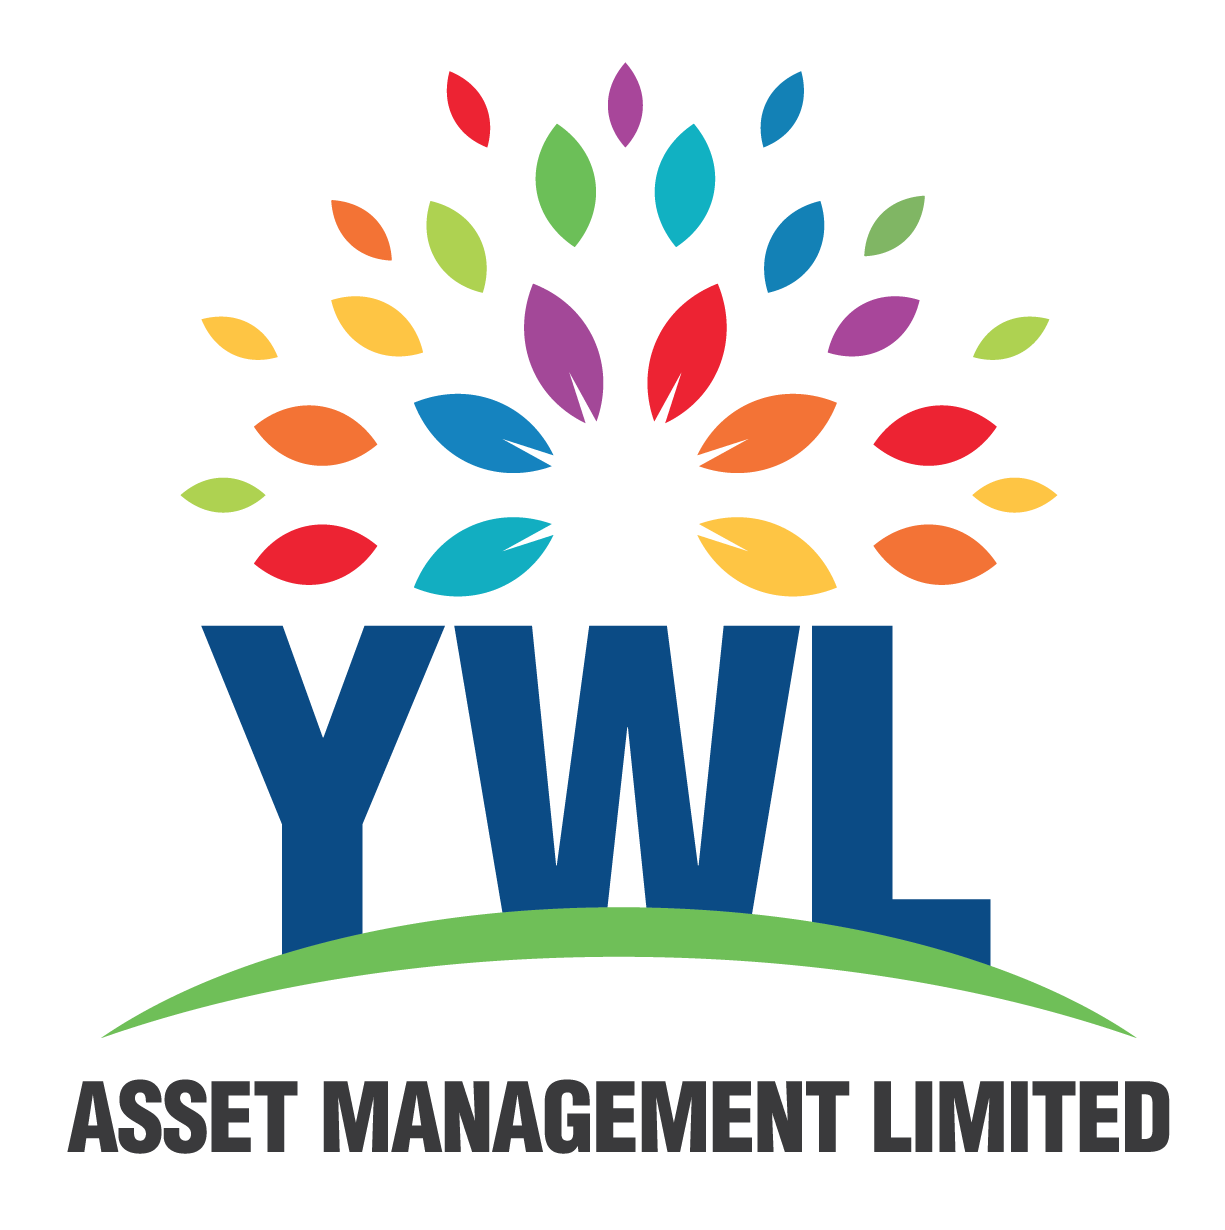 YWL Asset Management Limited